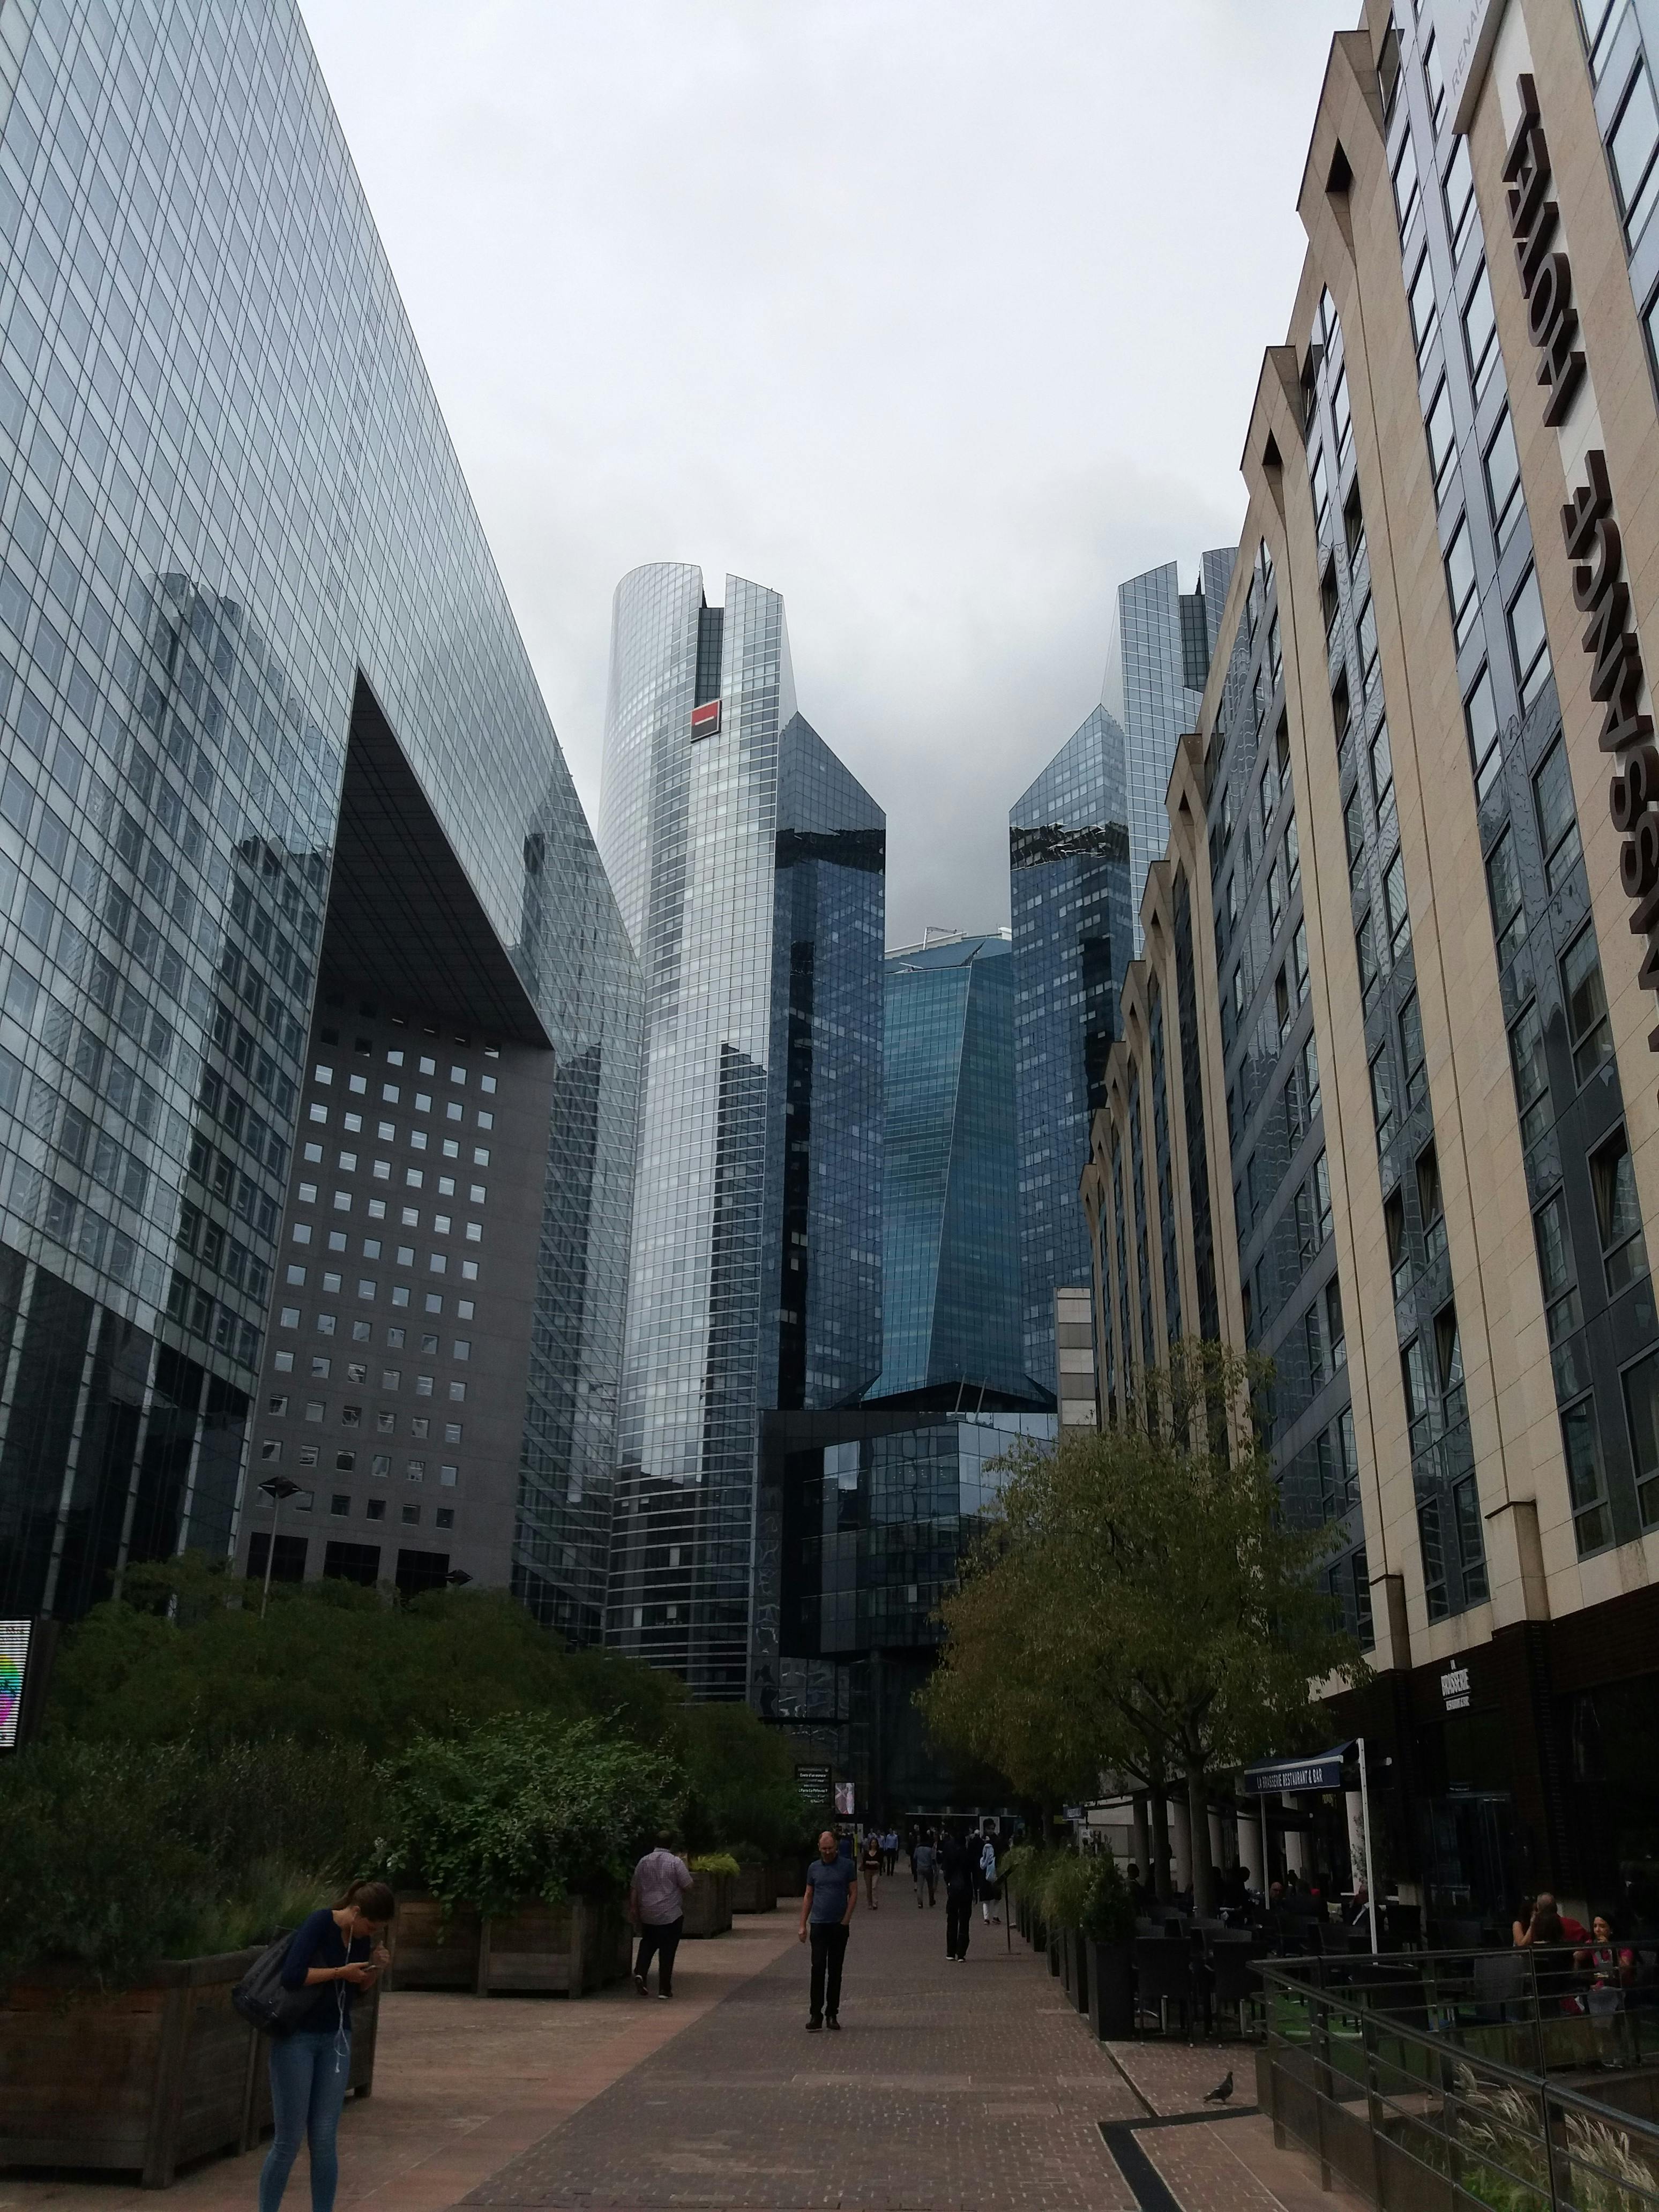 Free stock photo of Modern building, paris, skyscrapers